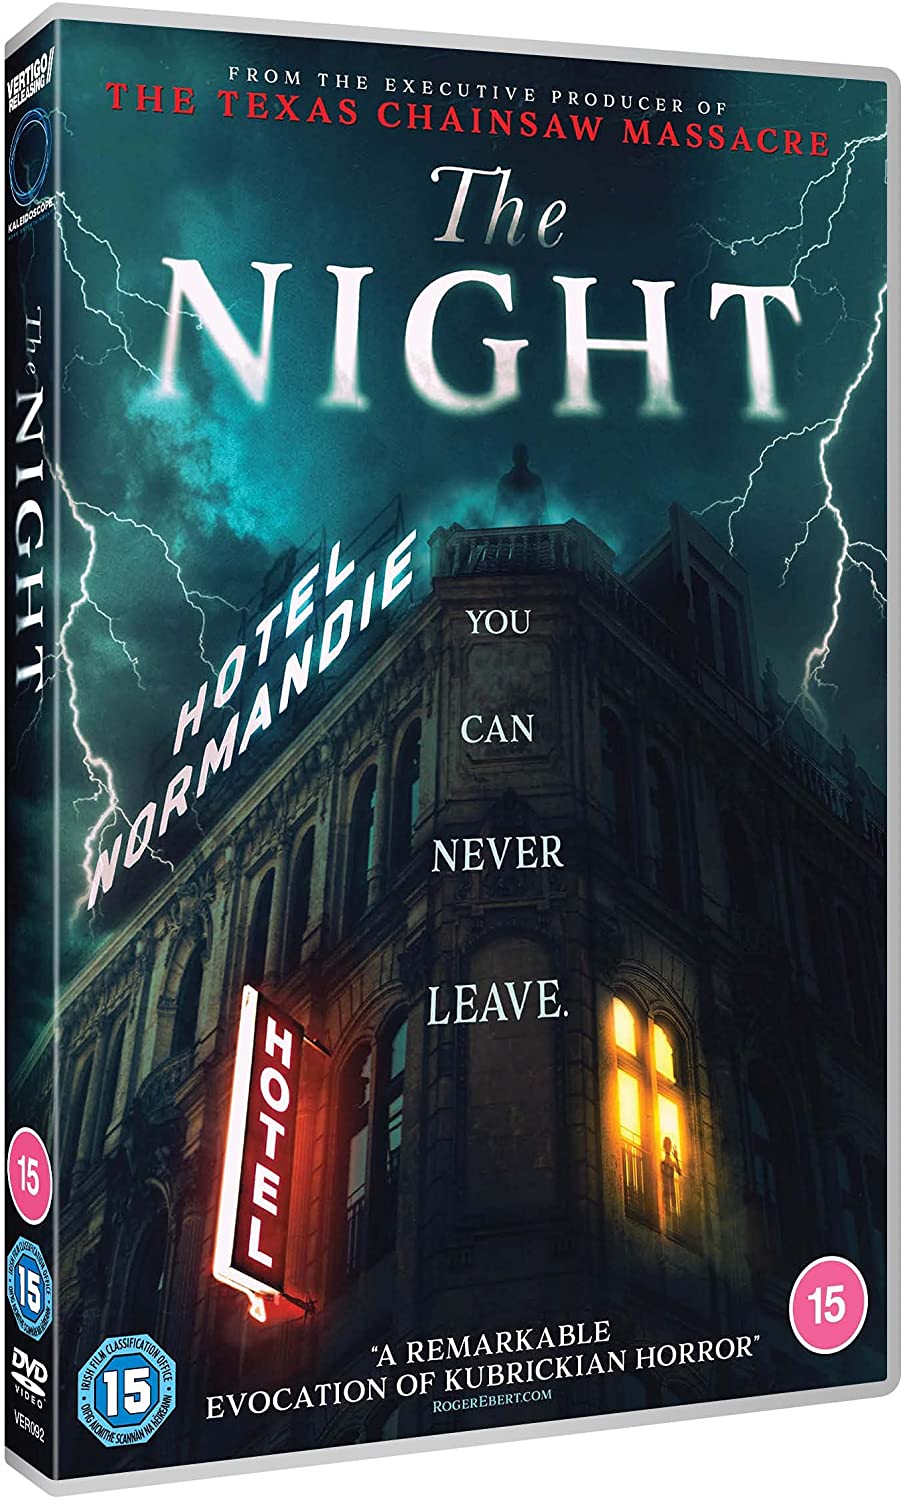 The Night - Horror/Thriller [DVD]